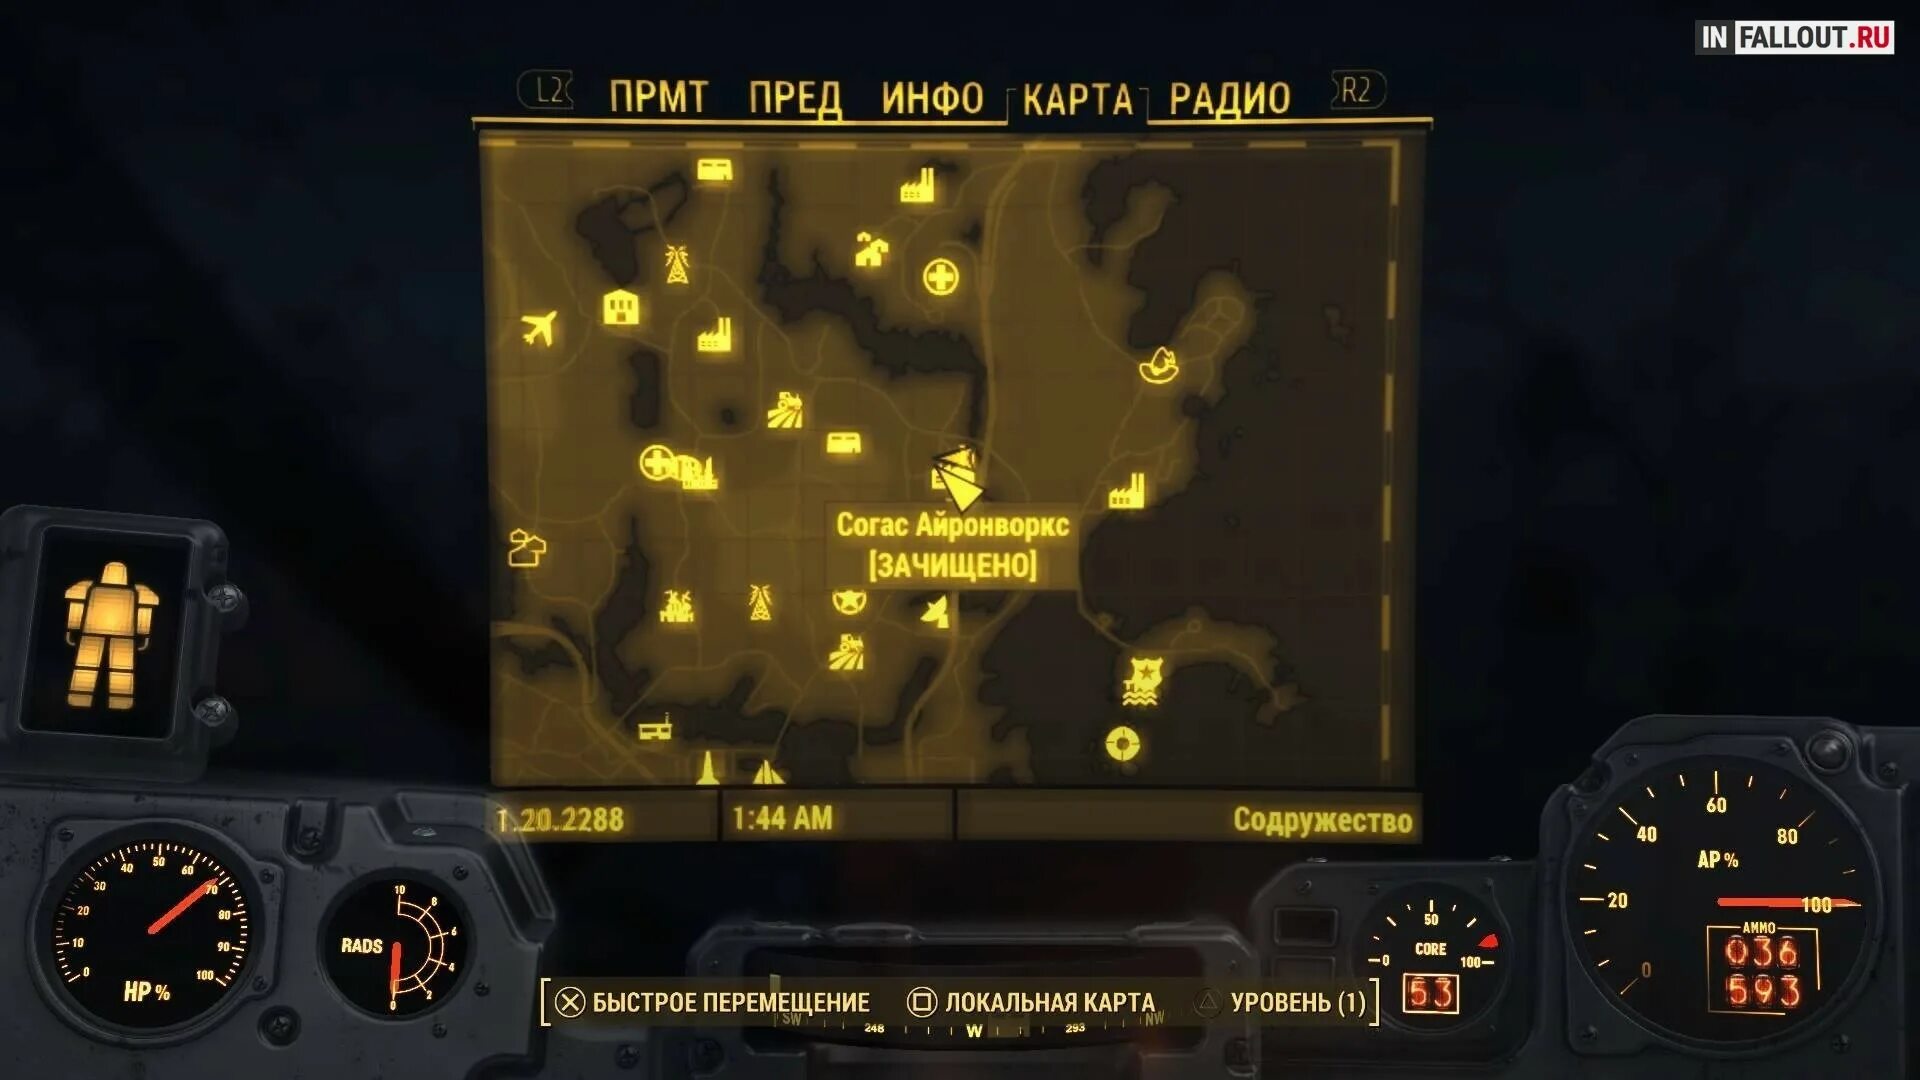 Пупсы фоллаут карта. Fallout 4 пупсы. Fallout 3 пупсы на карте. Карта пупсов фоллаут 4. Пупс интеллект Fallout 4 местонахождение.